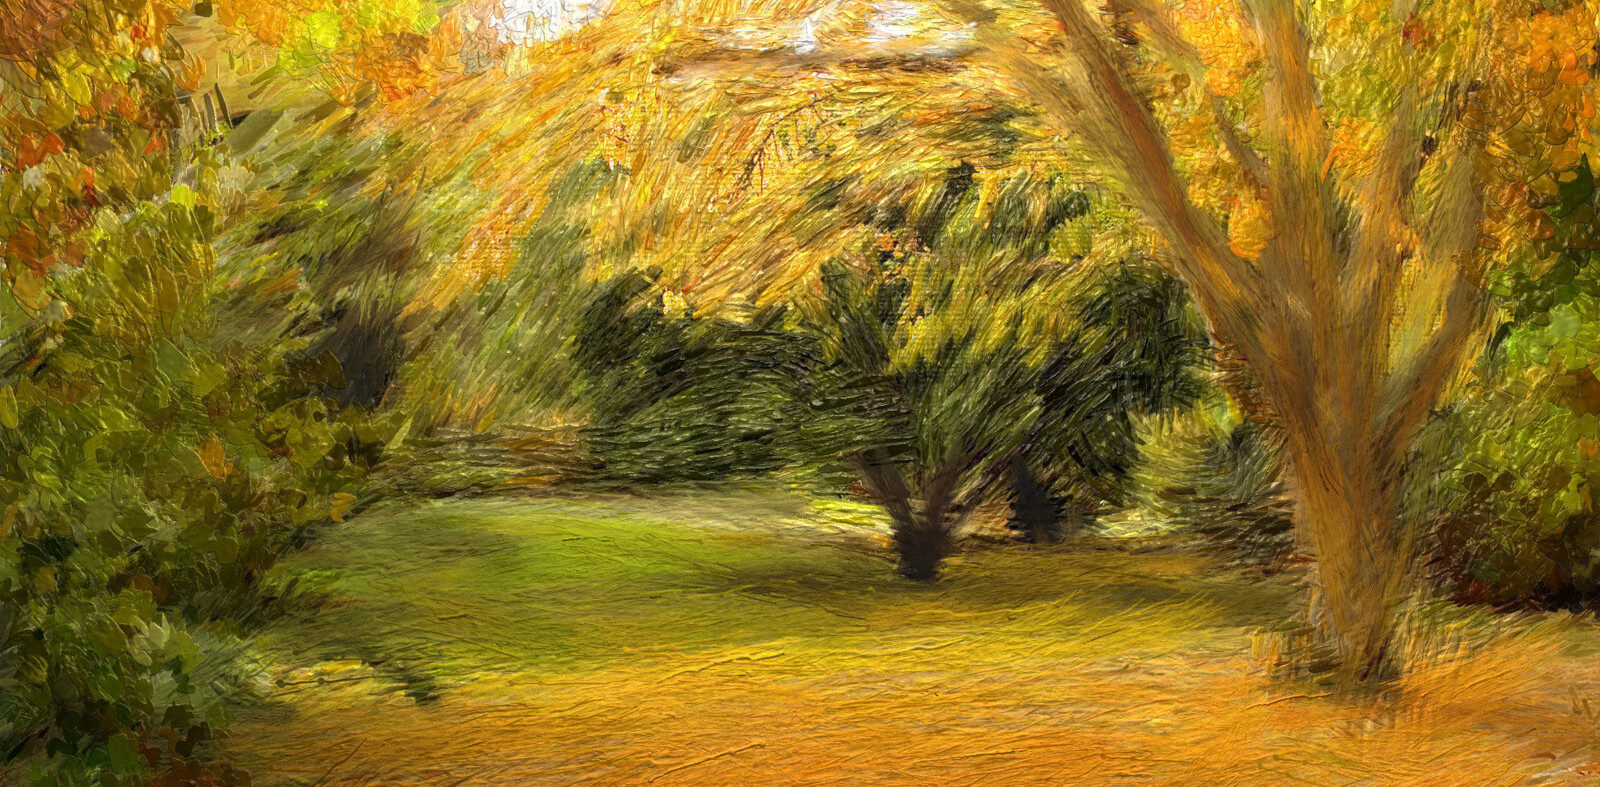 Psykopaint iPad painting app serves up Monet, Van Gogh brush strokes with 3D flair